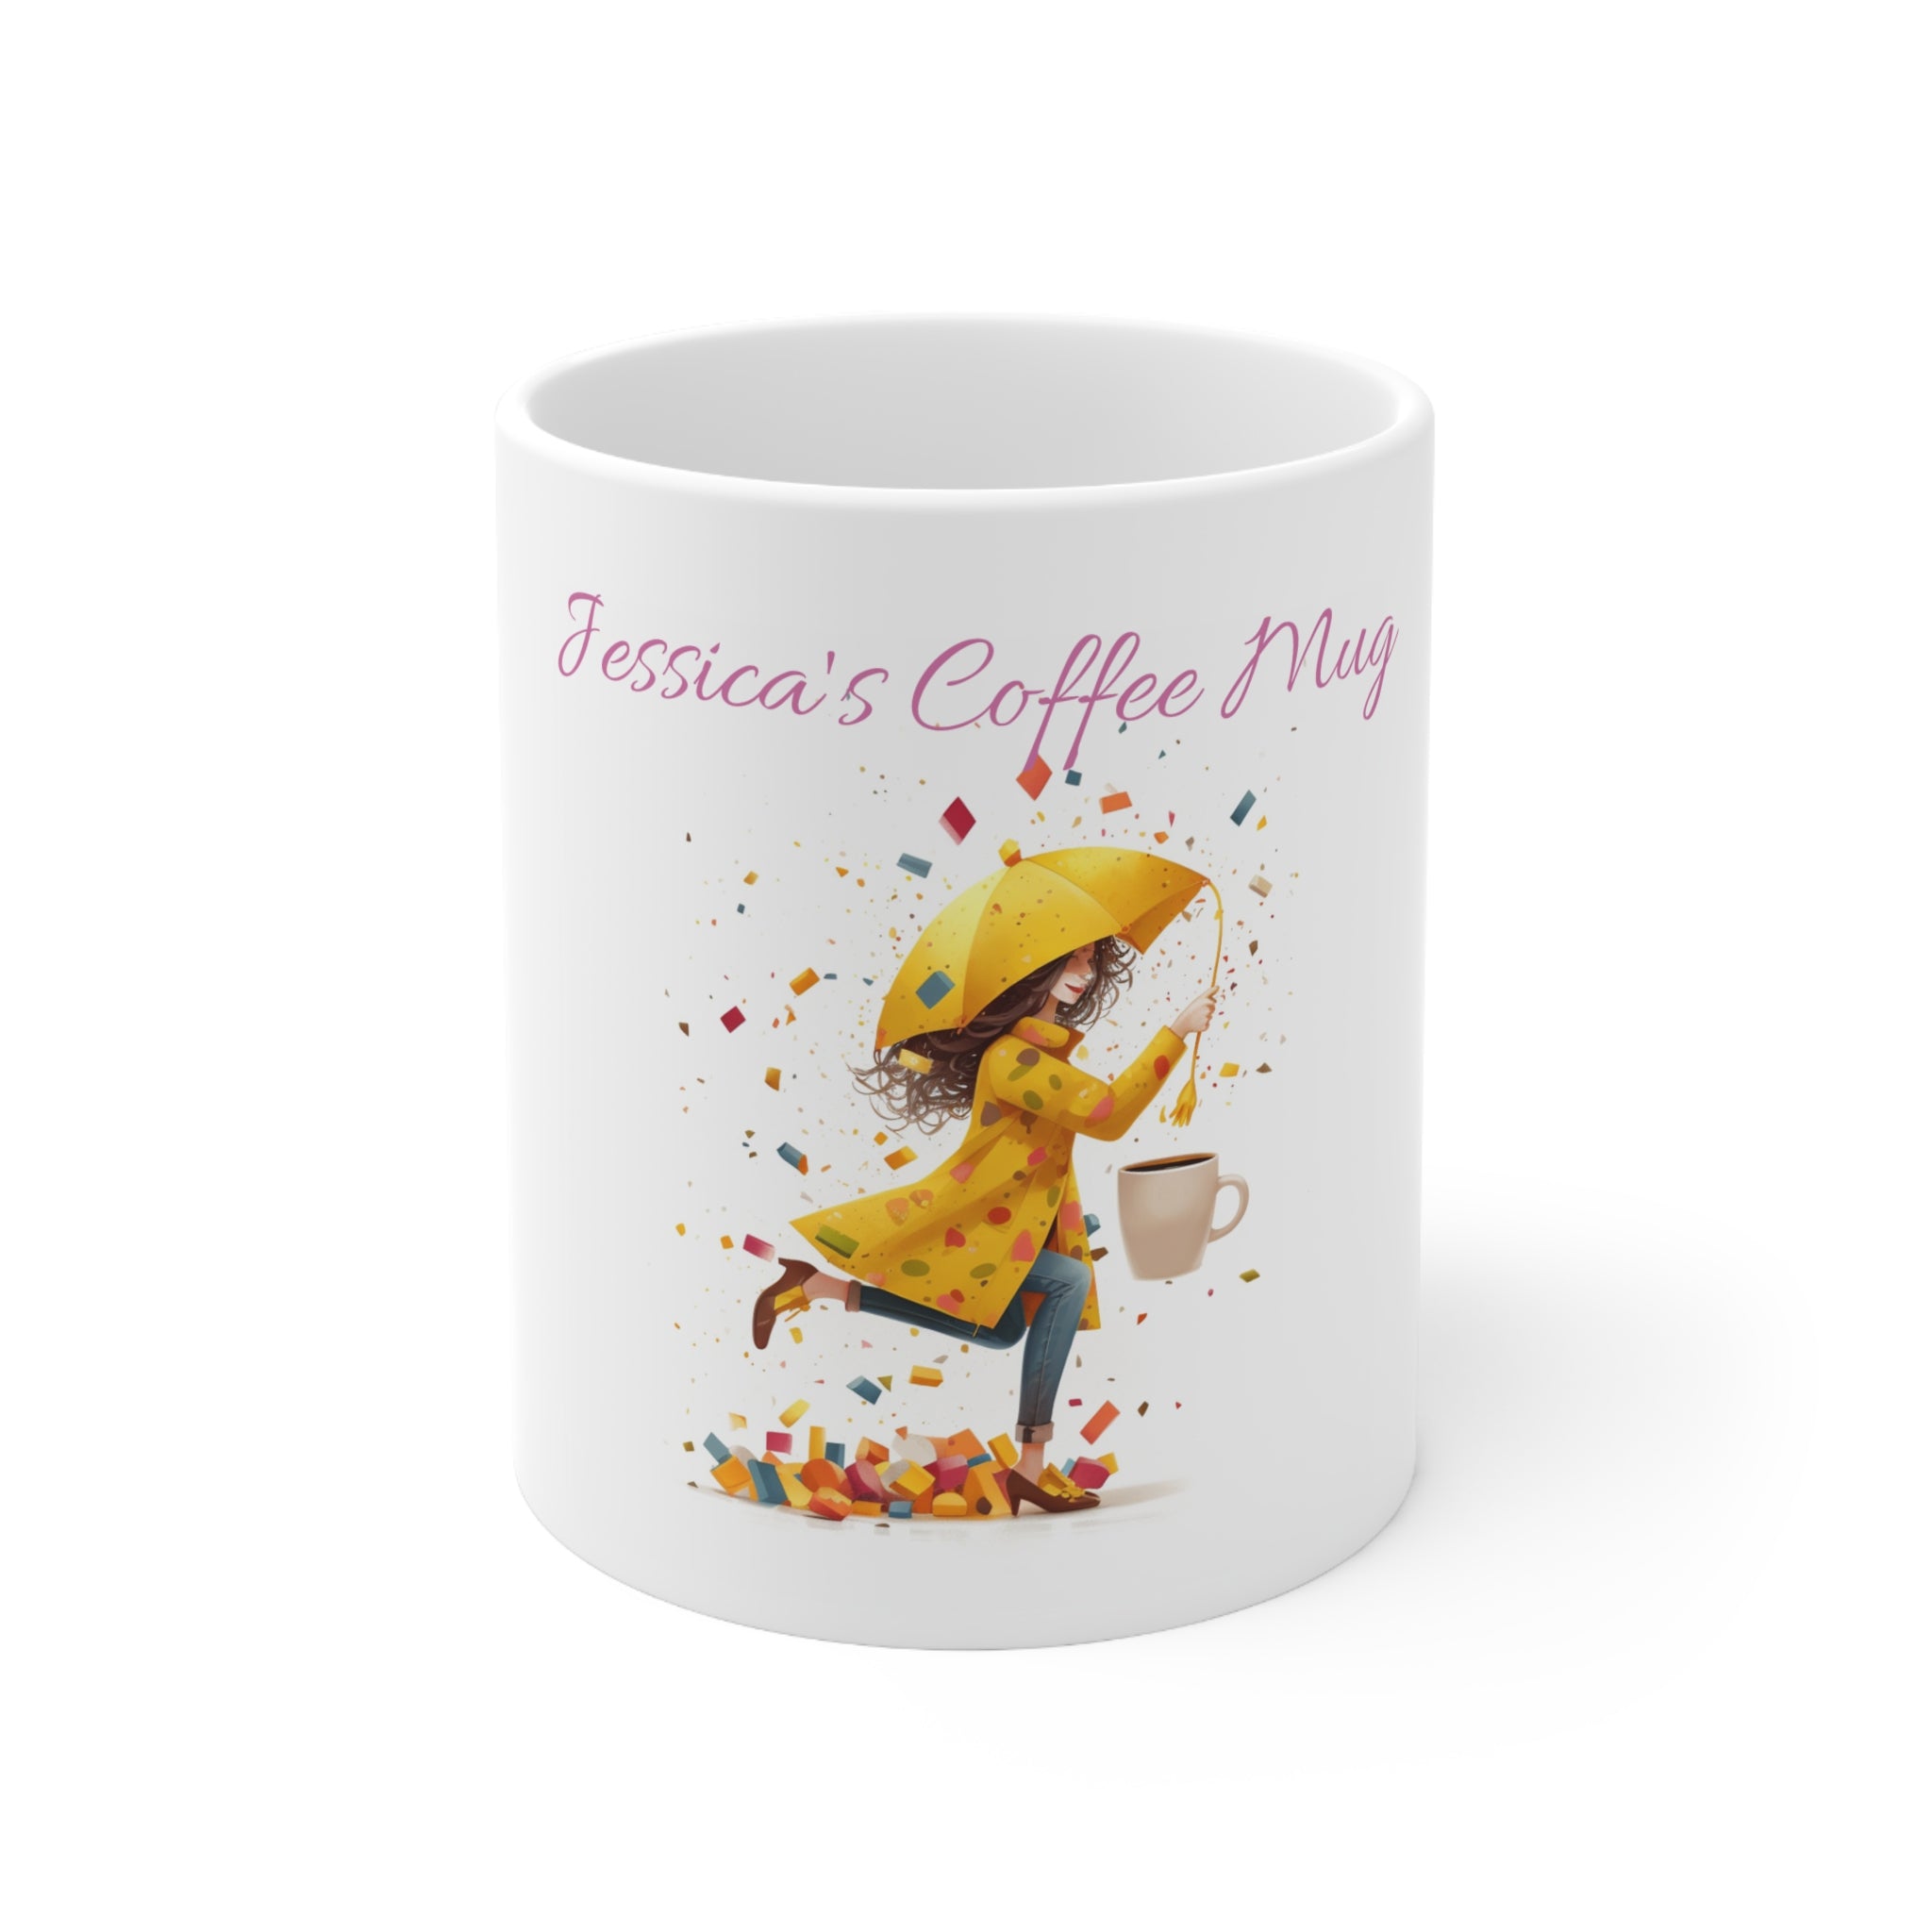 Magical Ceramic Mug 11oz - Enchanted Sarah's Coffee Mug  Unique Gift for Coffee Lovers Enchanted Sarah's Coffee Mug  Magical Ceramic Cup